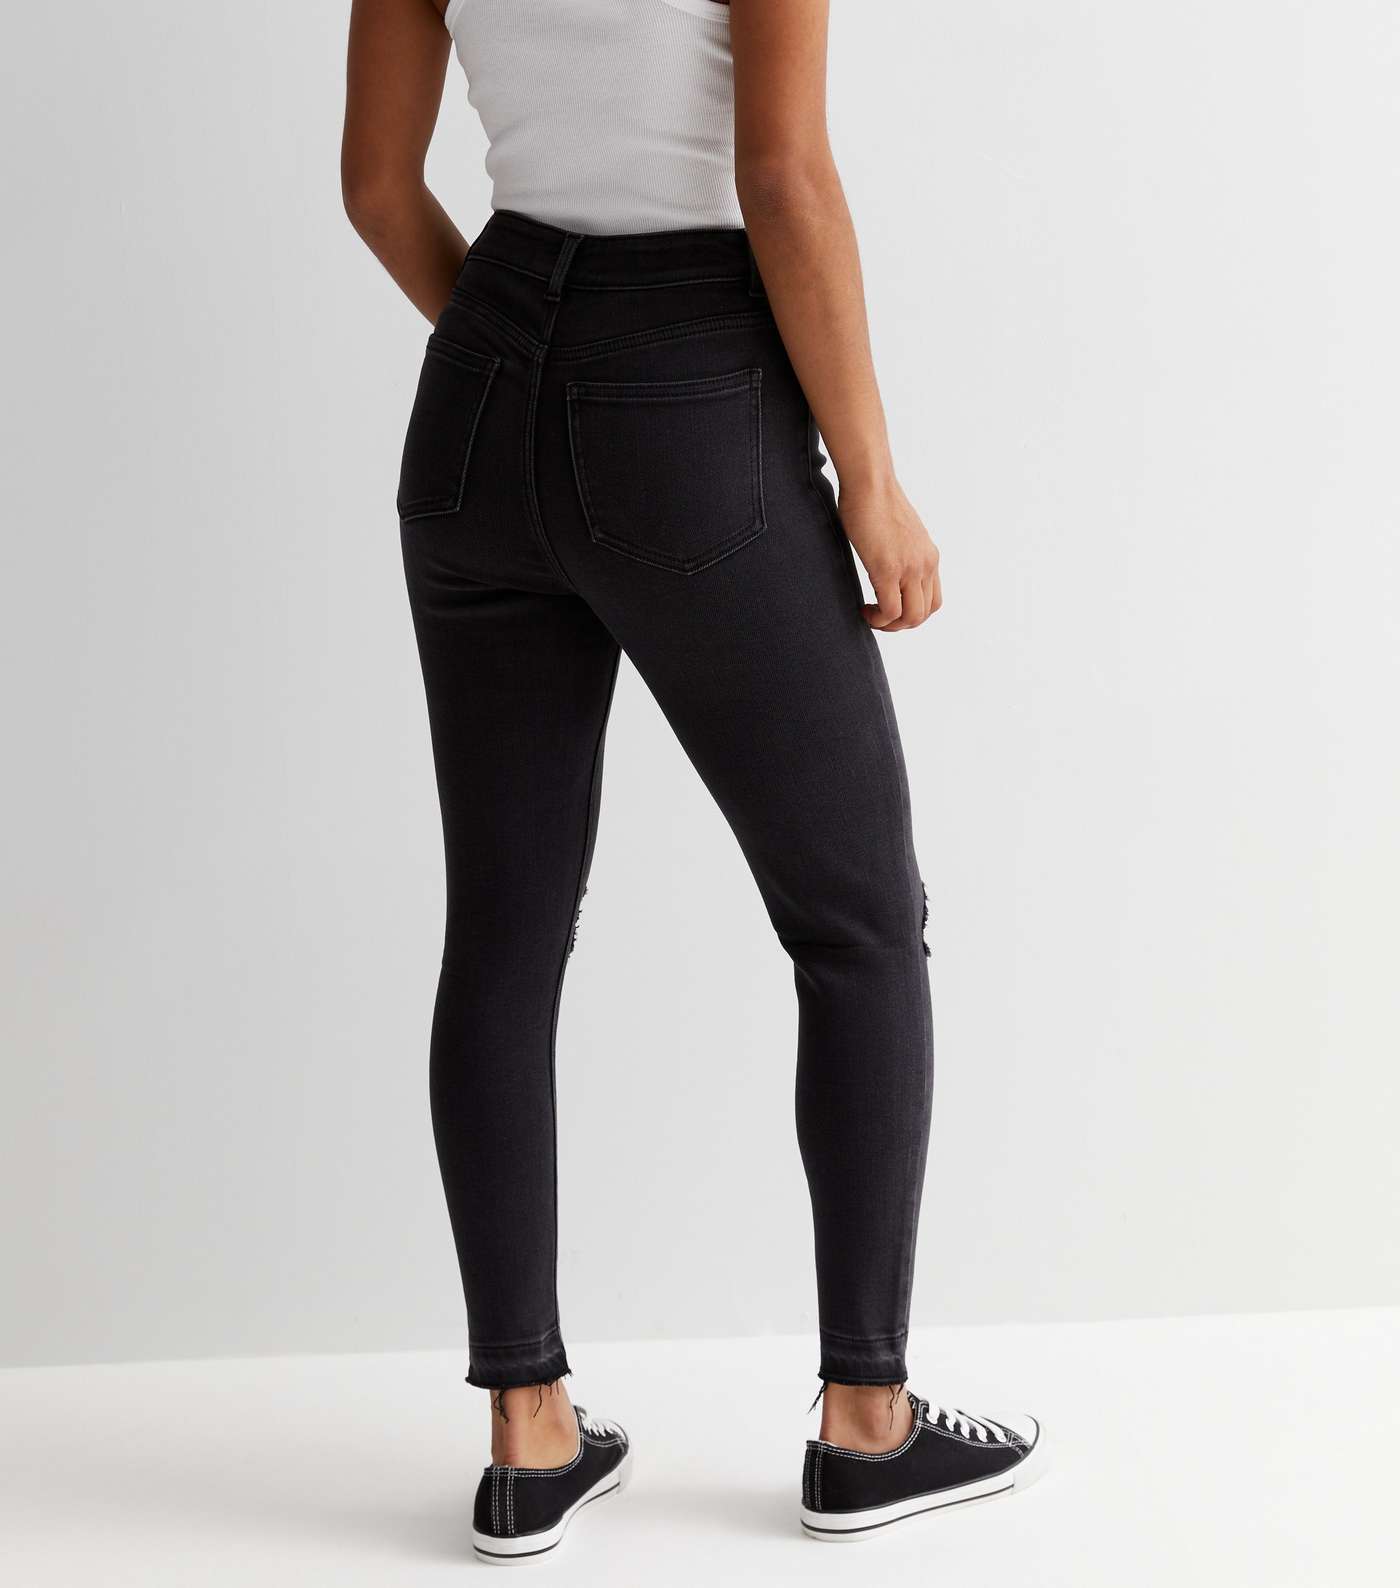 Petite Black Ripped Knee High Waist Hallie Super Skinny Jeans Image 4